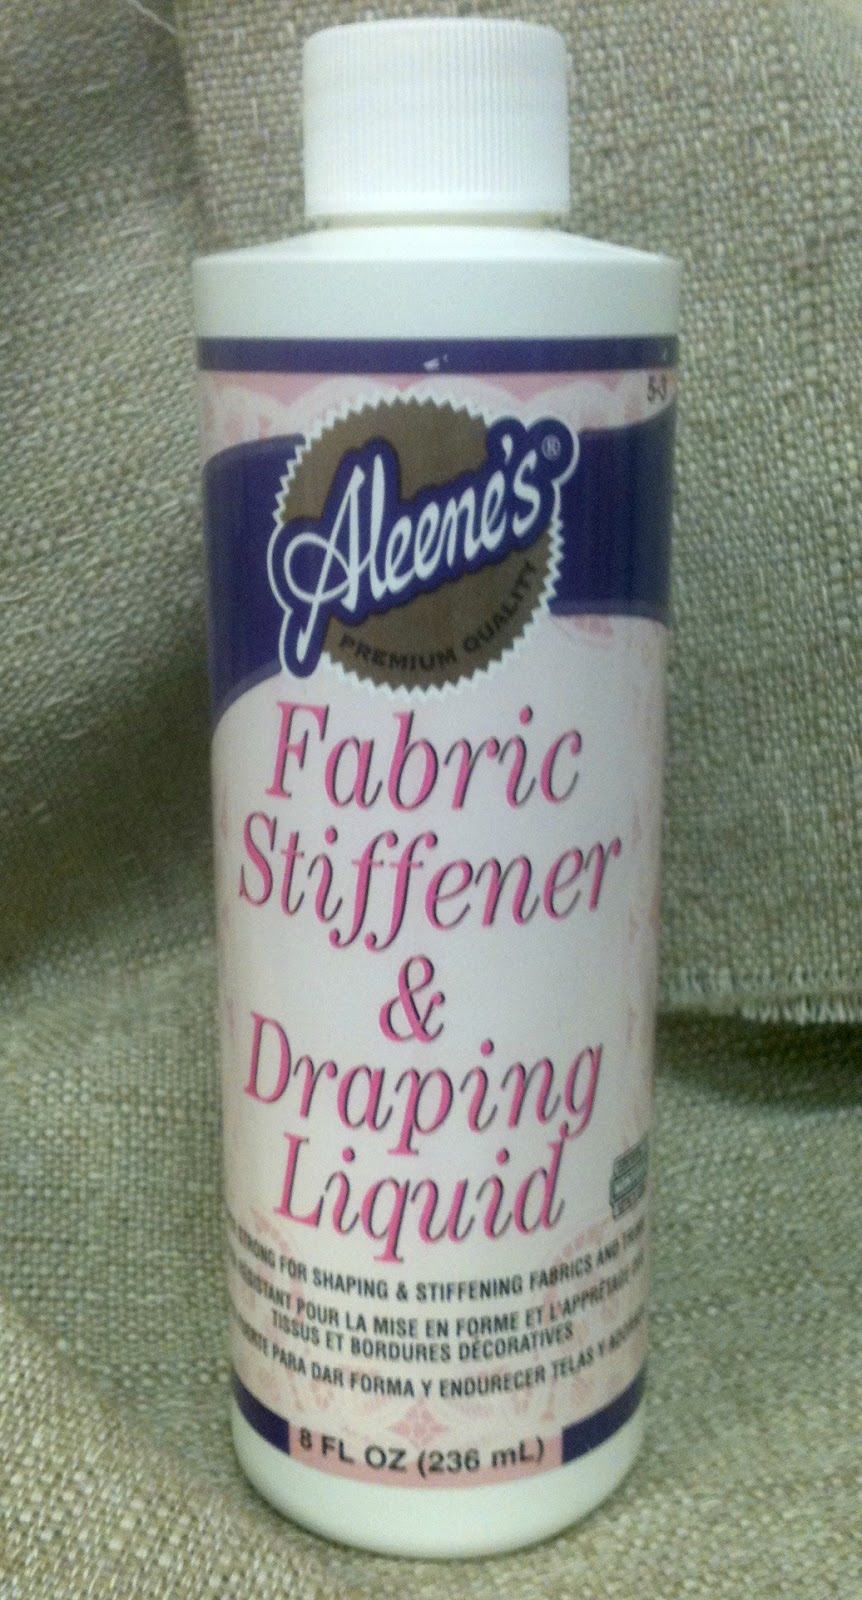 Aleene's Fabric Stiffener & Draping Liquid - 8 oz.